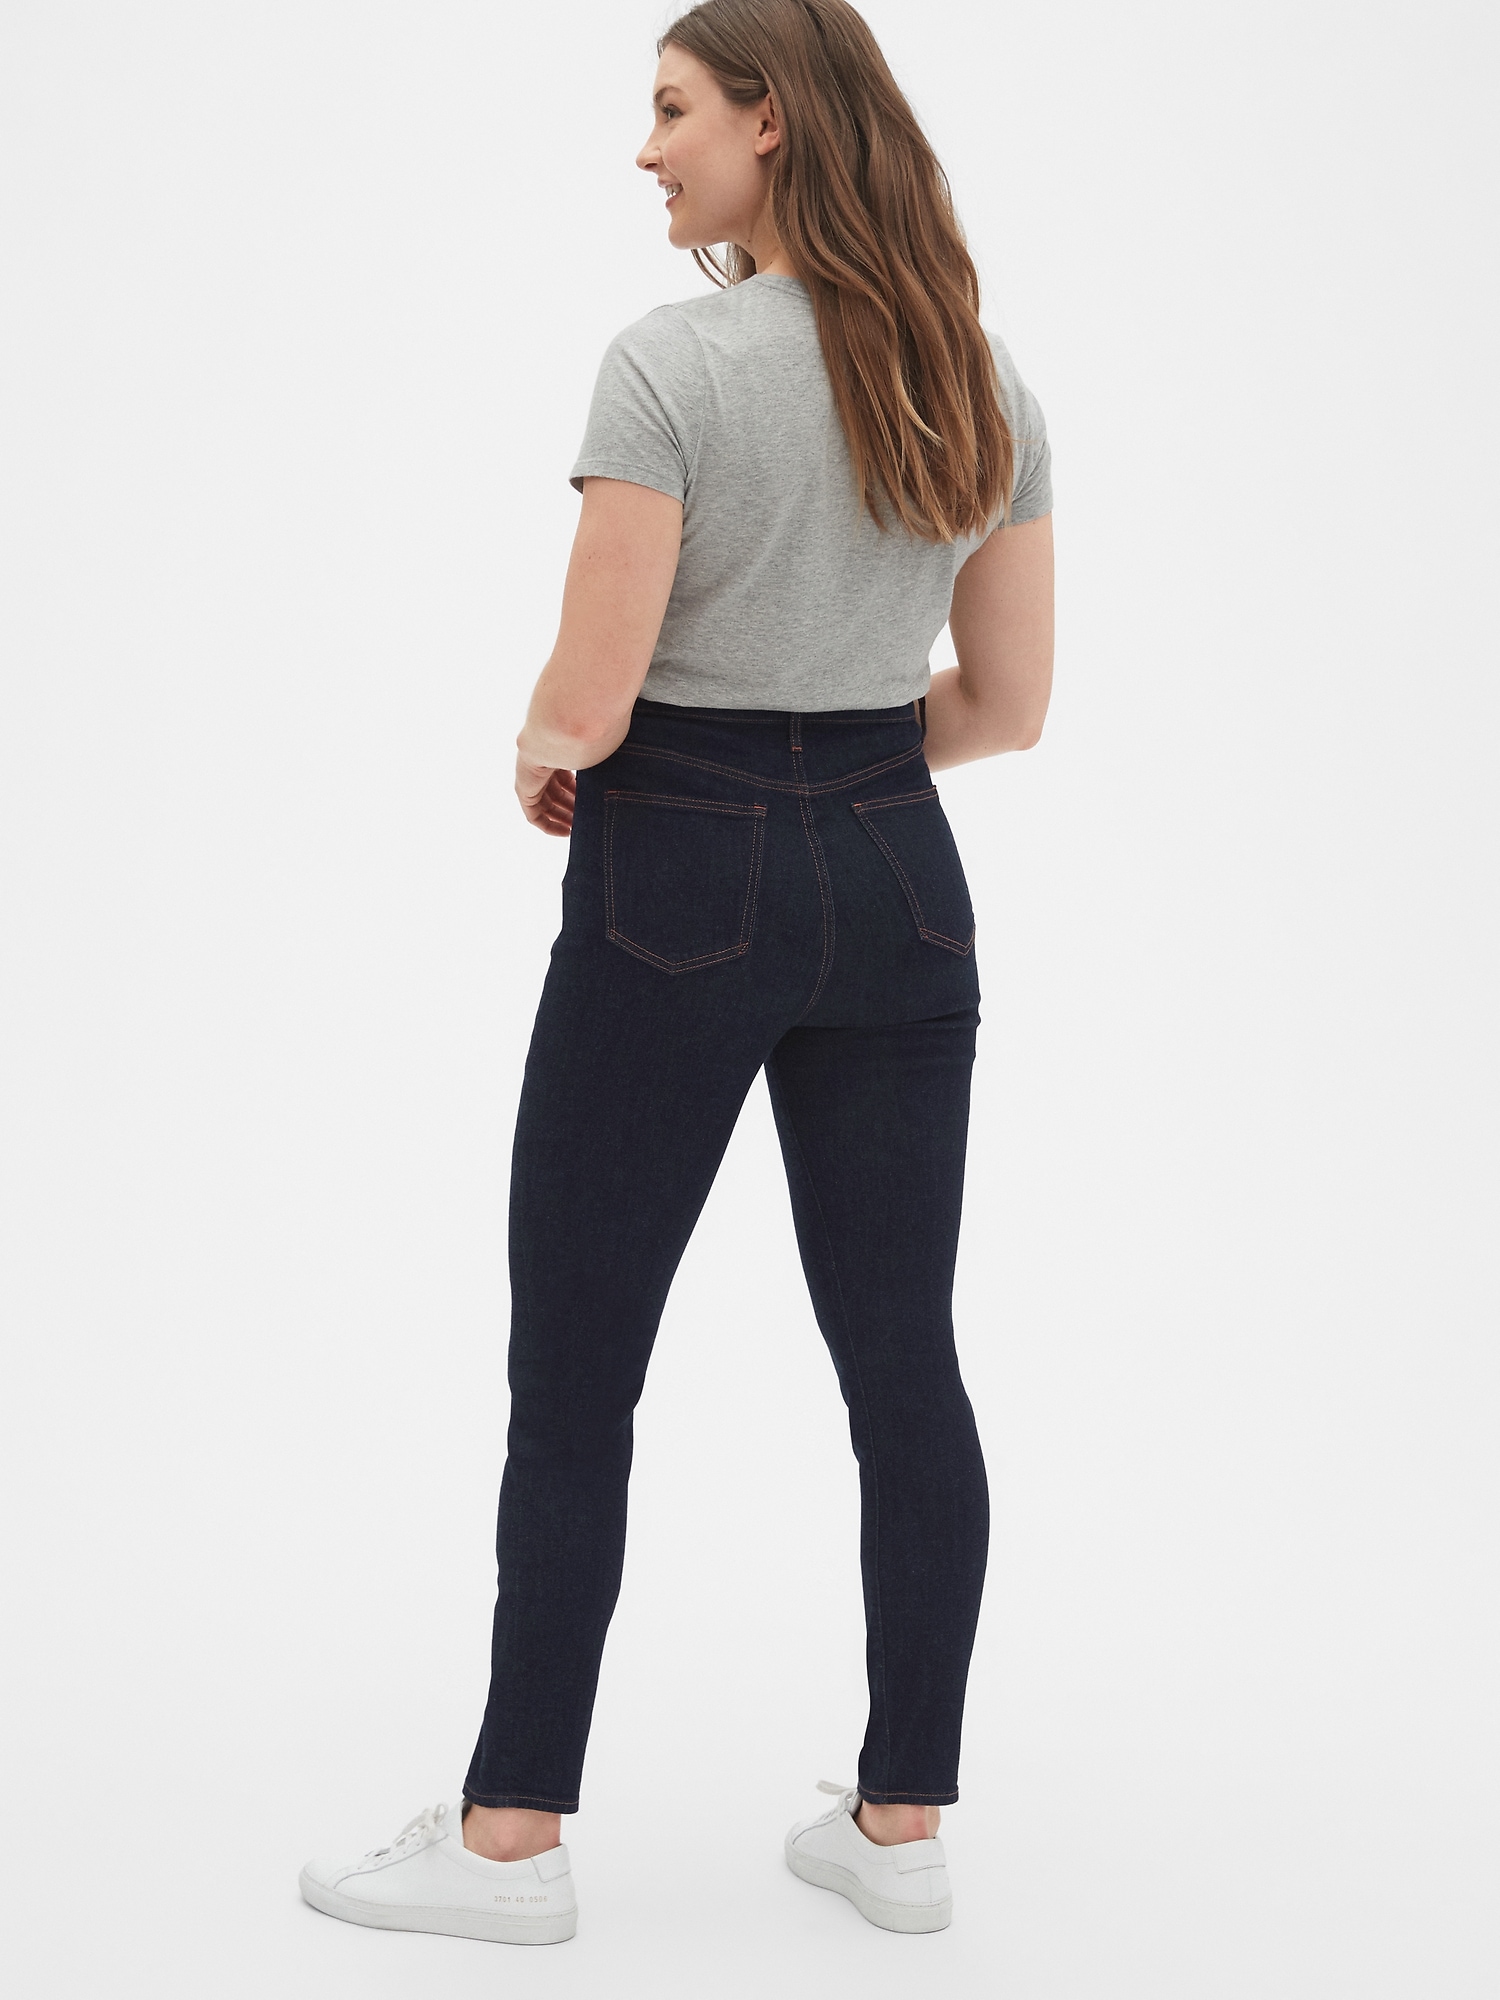 gap true skinny jeans